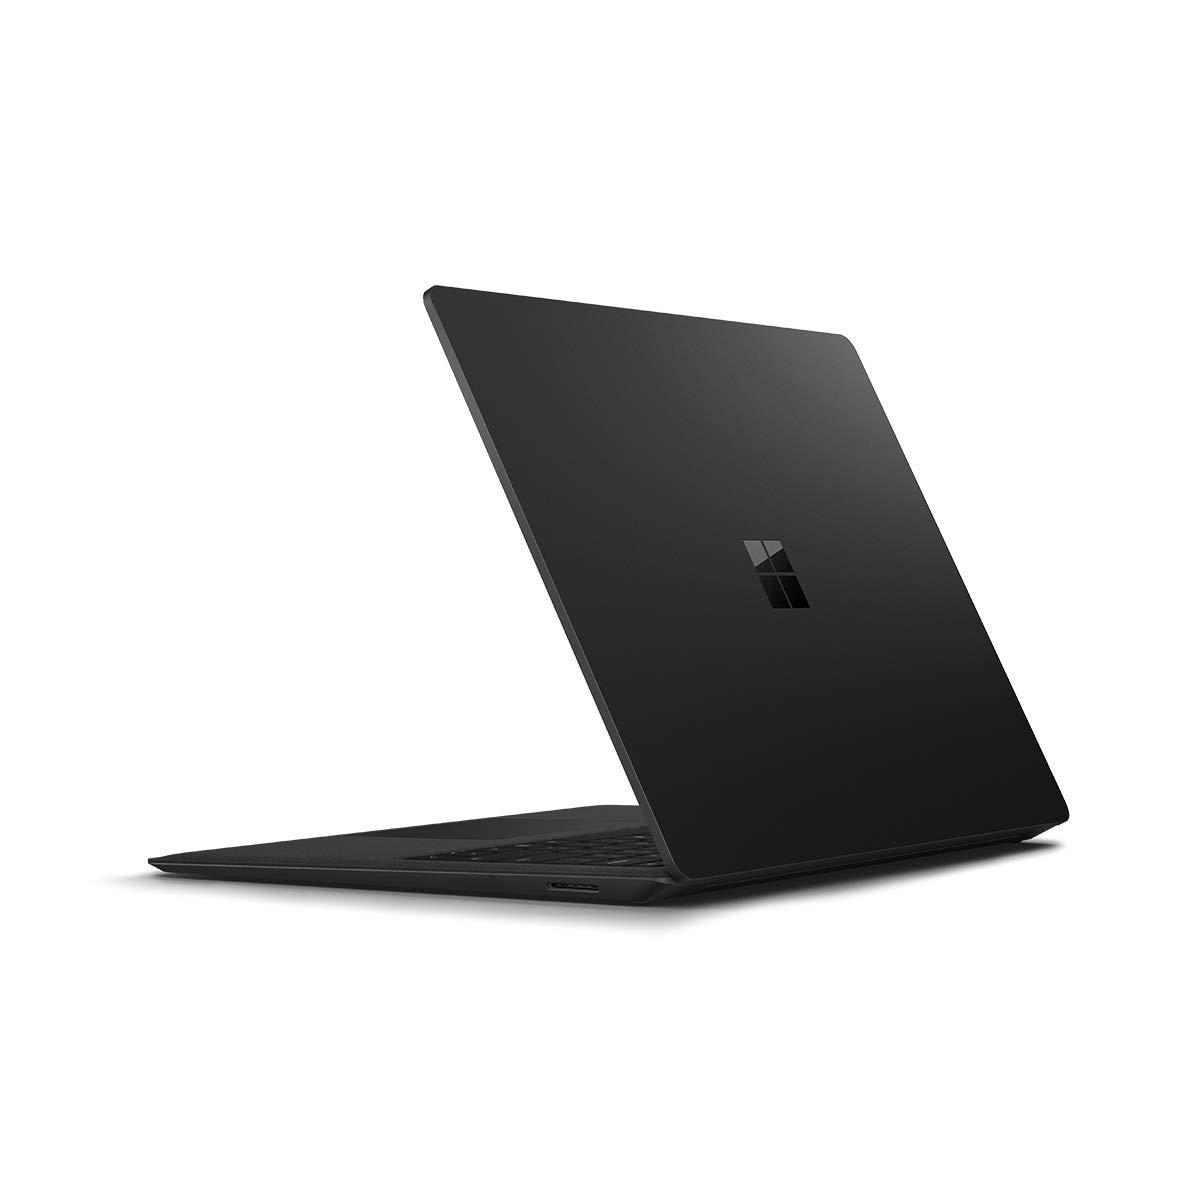 Microsoft Surface Laptop 2 (Intel Core i7, 8GB RAM, 256 GB) - Black Newest Version